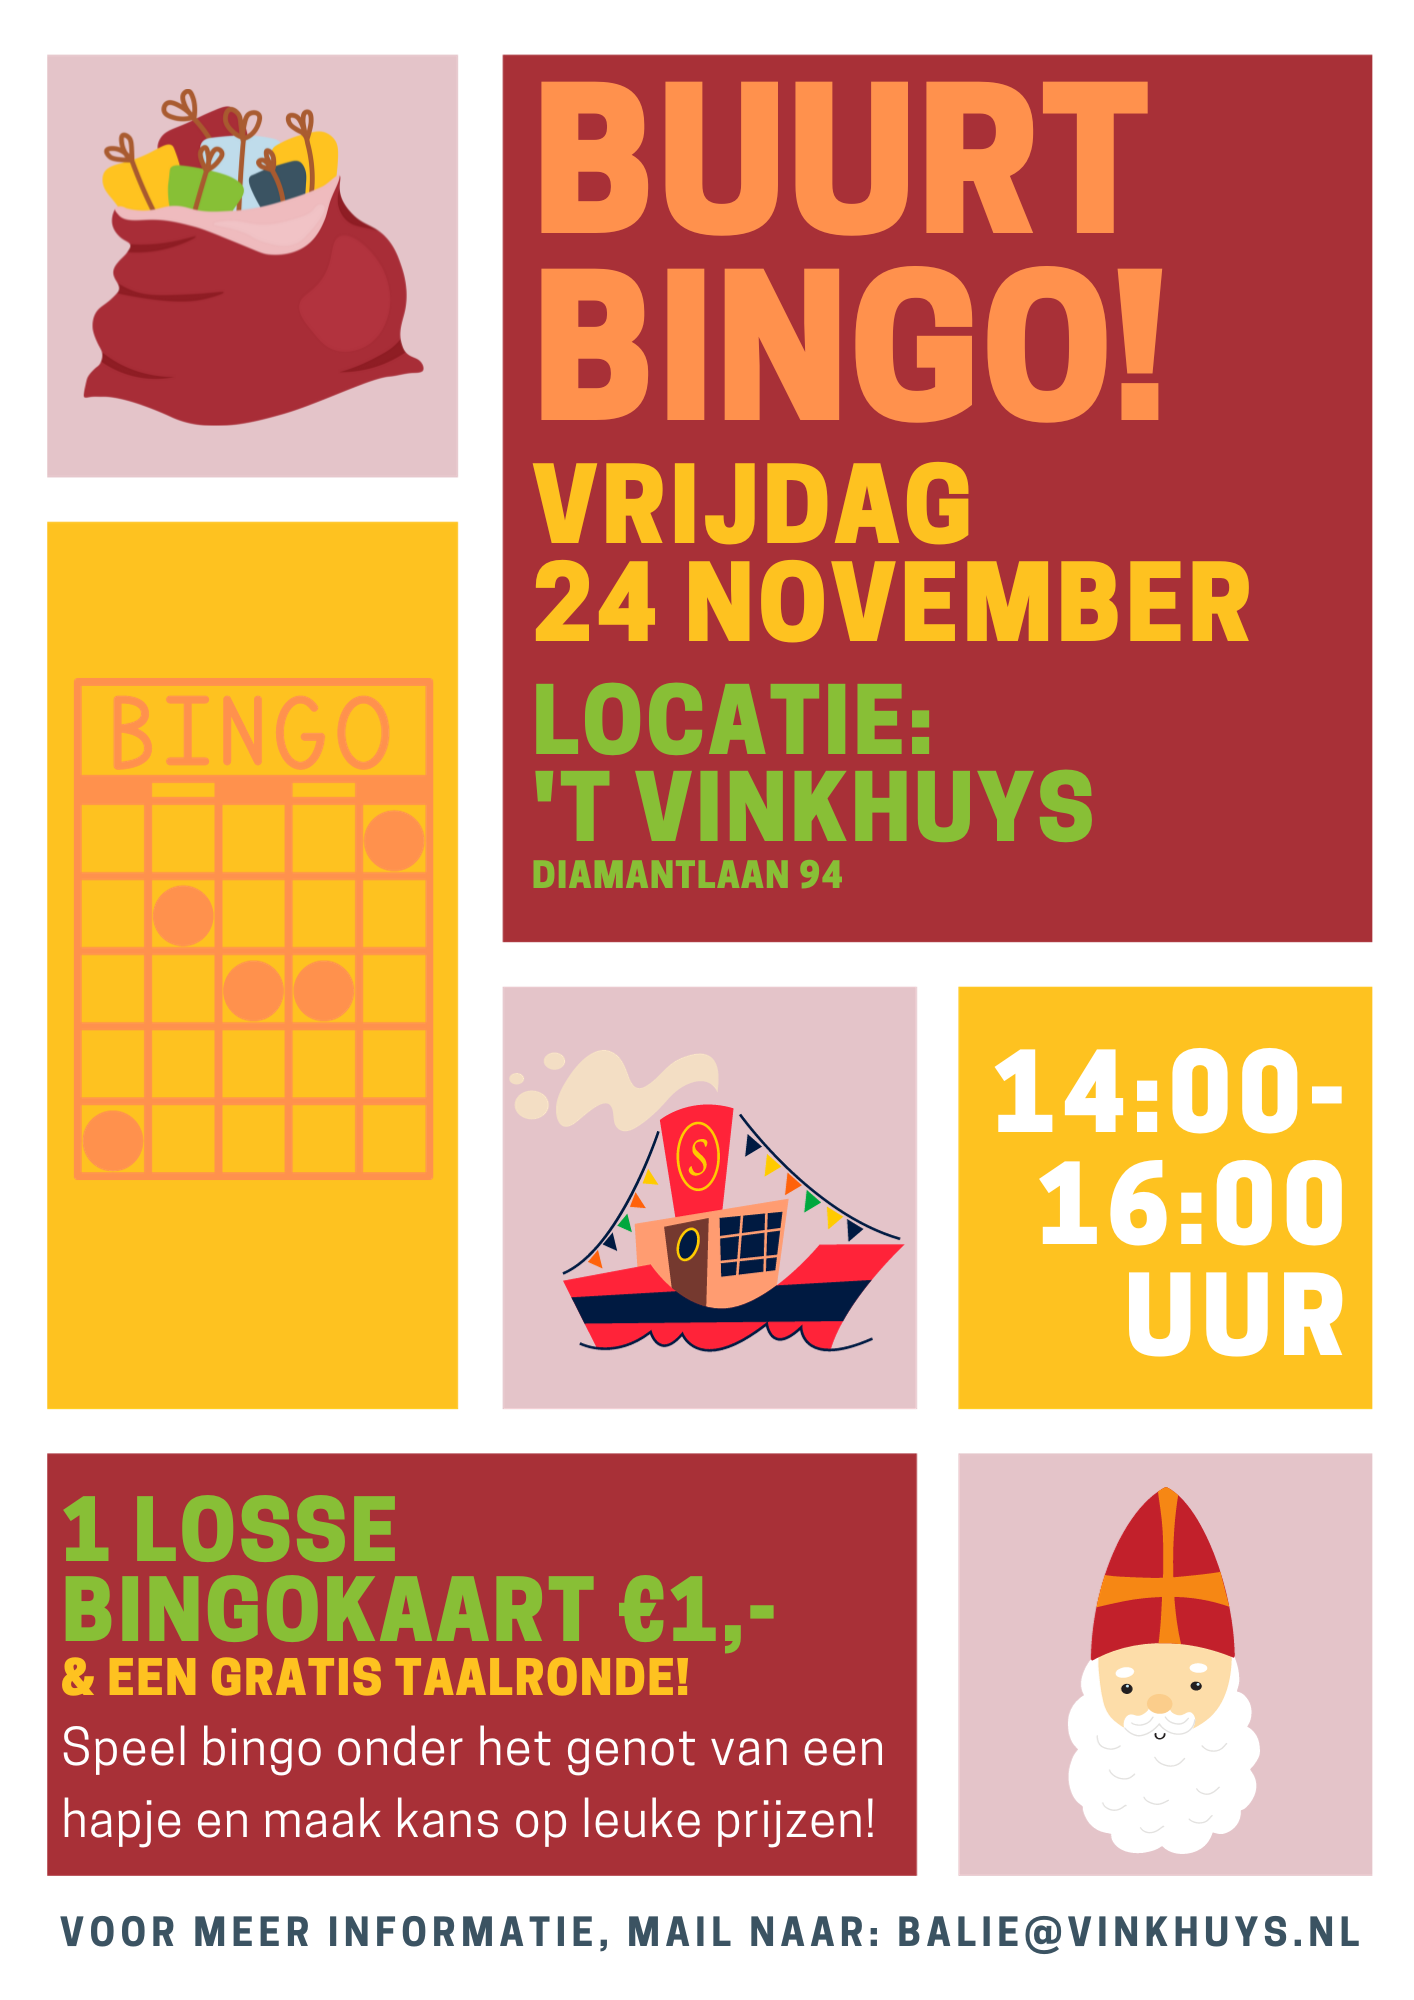 Buurt-bingo!-24-november